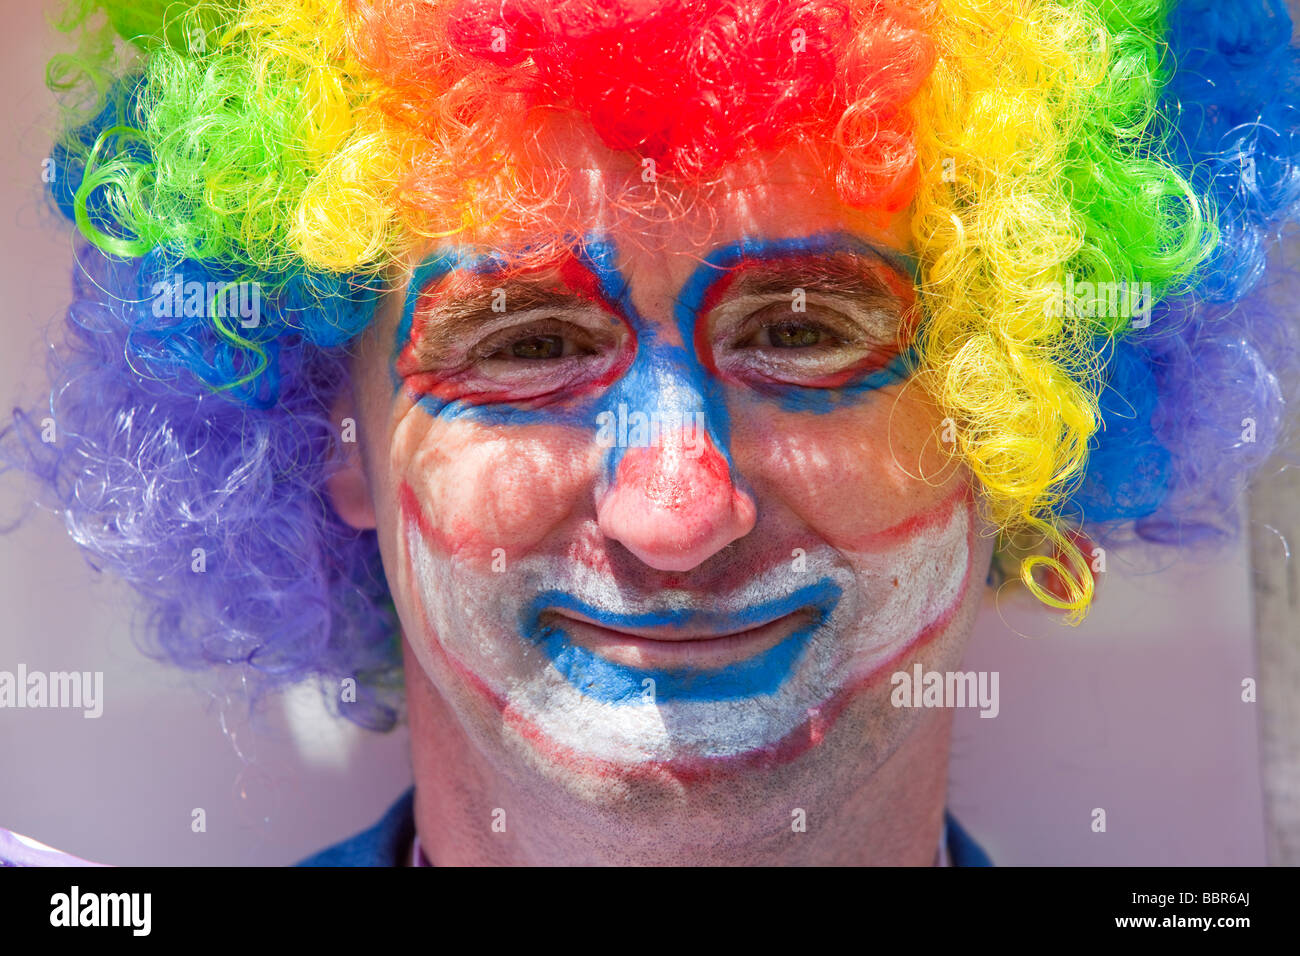 Ein Mann verkleidet als Clown Ilfracome UK Stockfoto